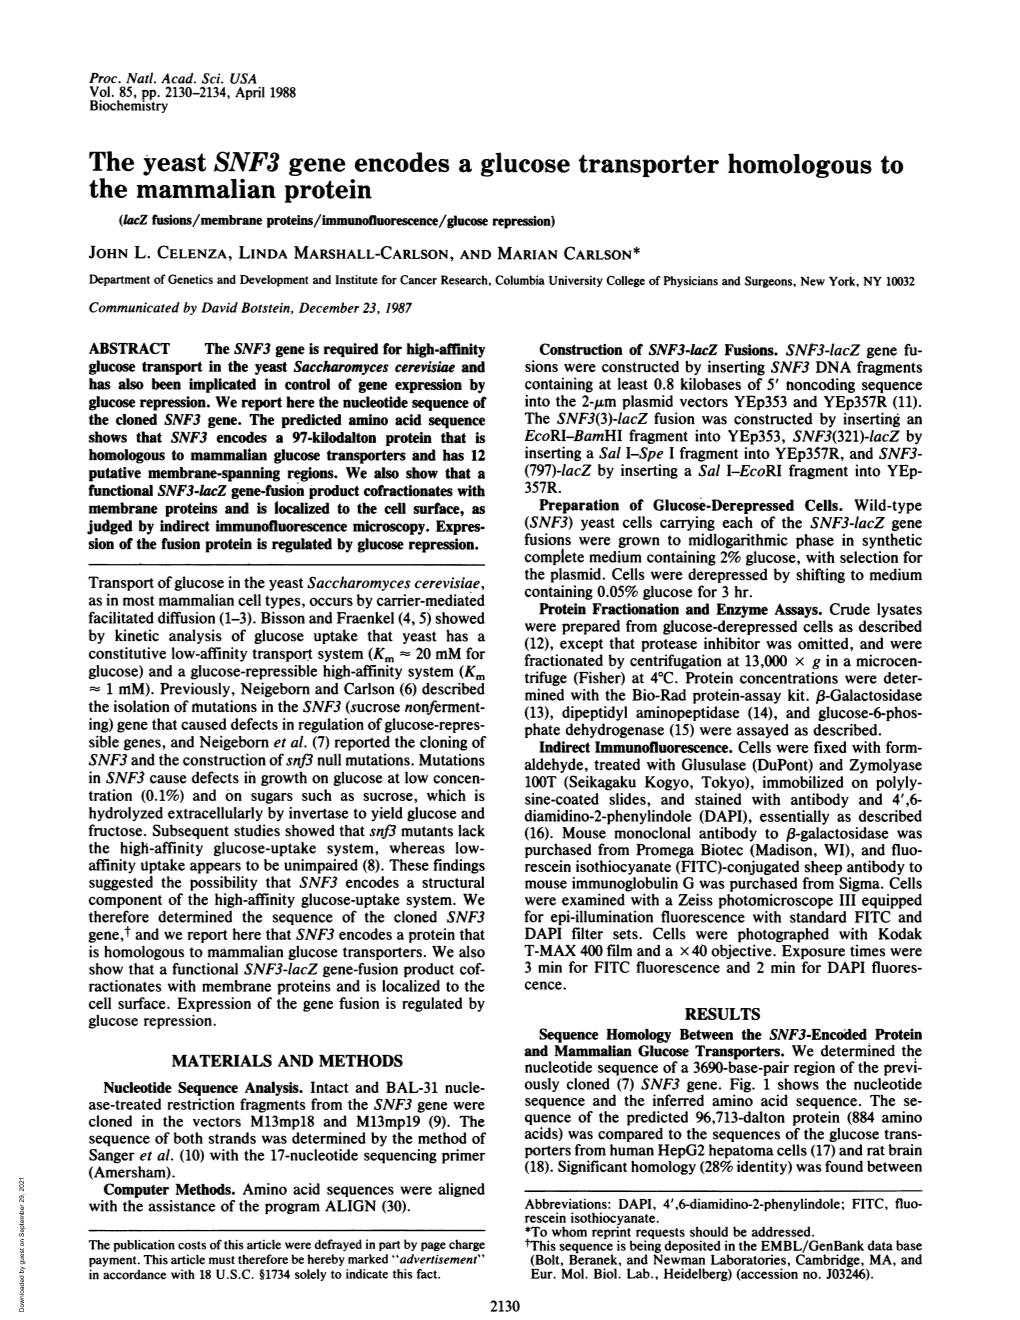 The Yeast SNF3 Gene Encodes a Glucose Transporter Homologous to the Mammalian Protein (1Acz Fusions/Membrane Proteins/Immunofluorescence/Glucose Repression) JOHN L